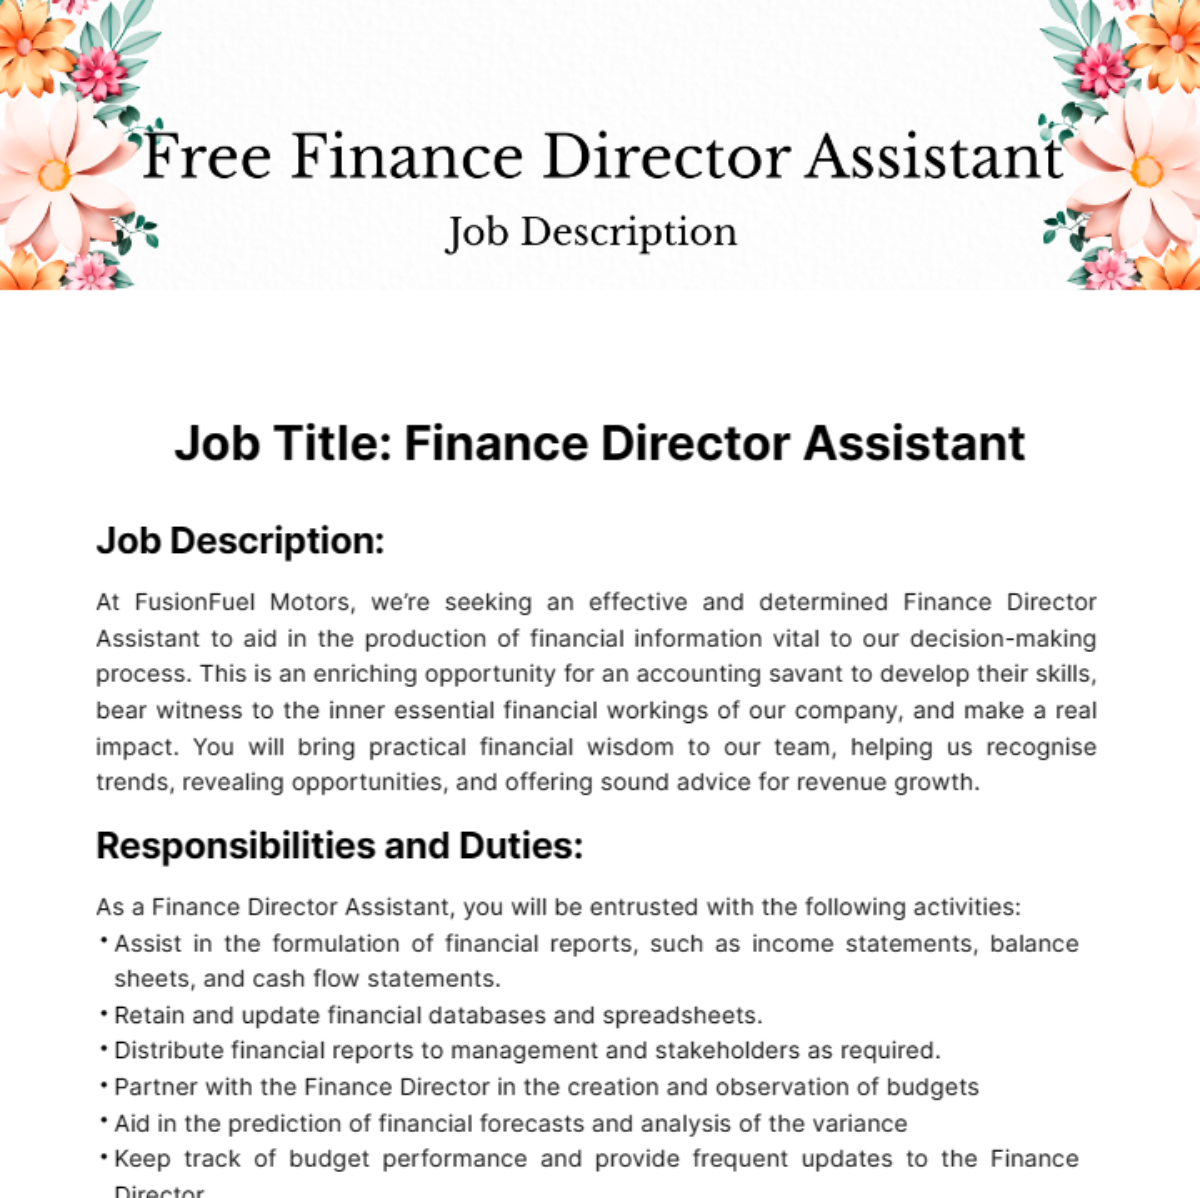 Finance Director Assistant Job Description Template